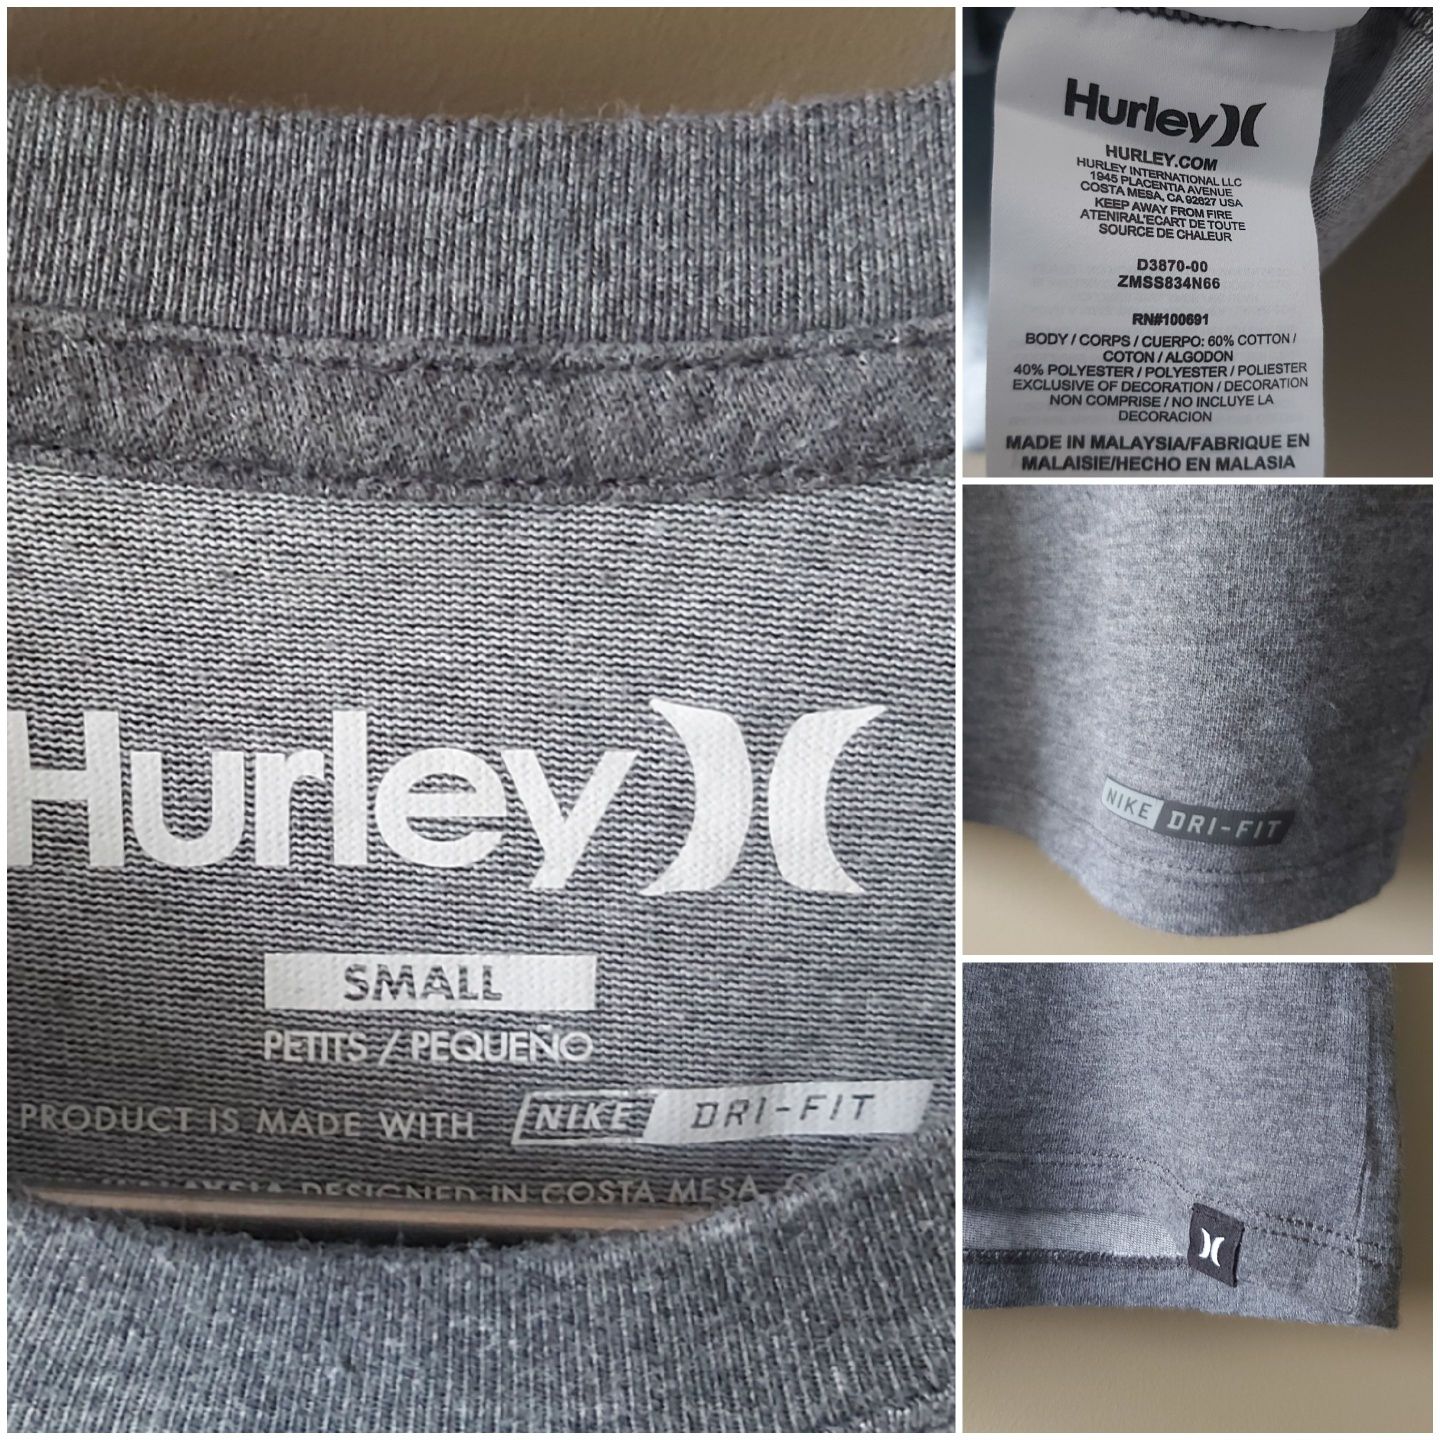 T-shirt koszulka  Hurley & Nike rozmiar S